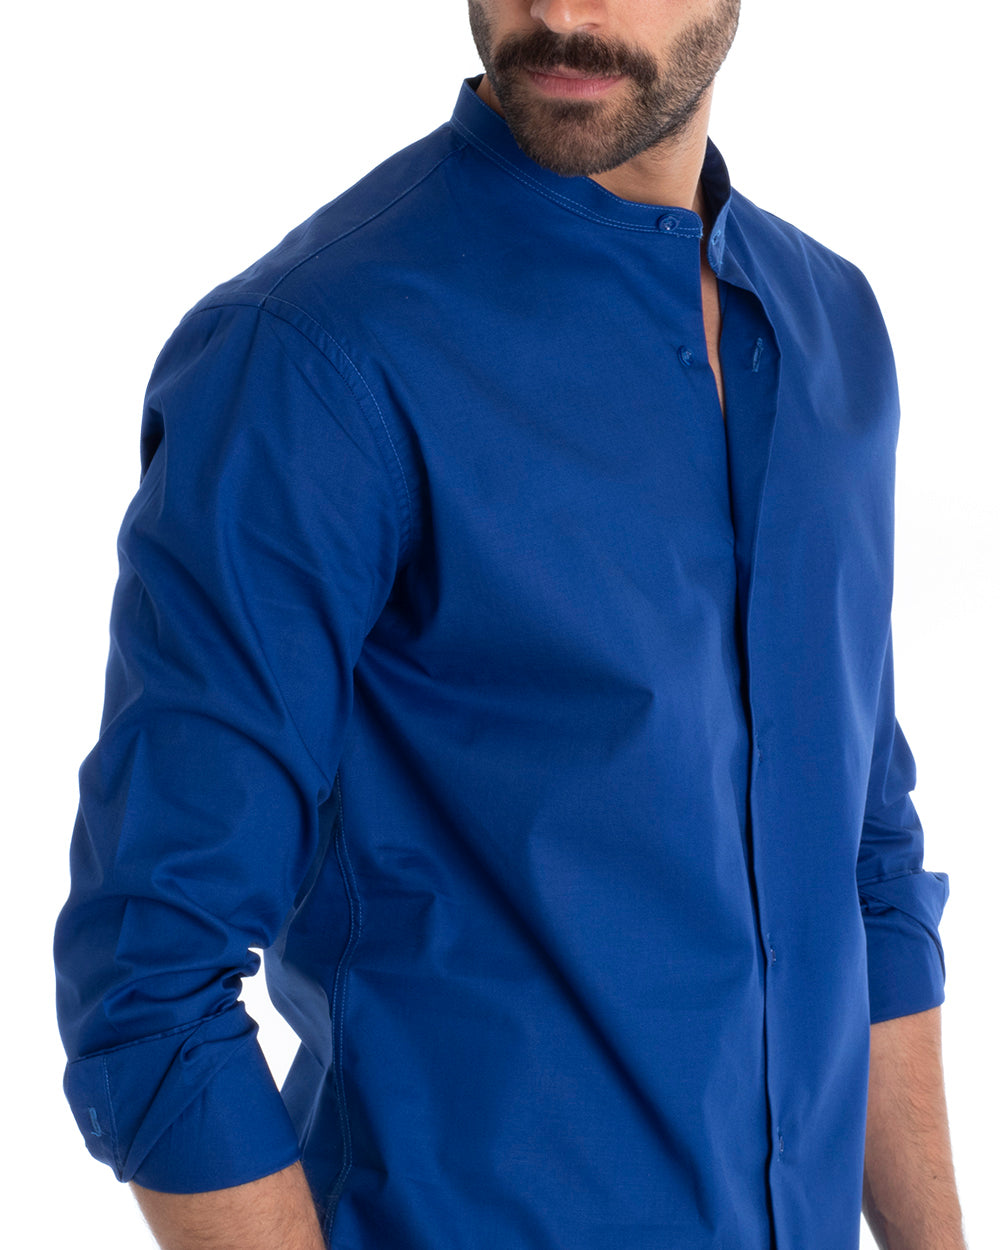 Men's Tailored Shirt Korean Collar Long Sleeve Basic Soft Cotton Royal Blue Regular Fit GIOSAL-C2370A